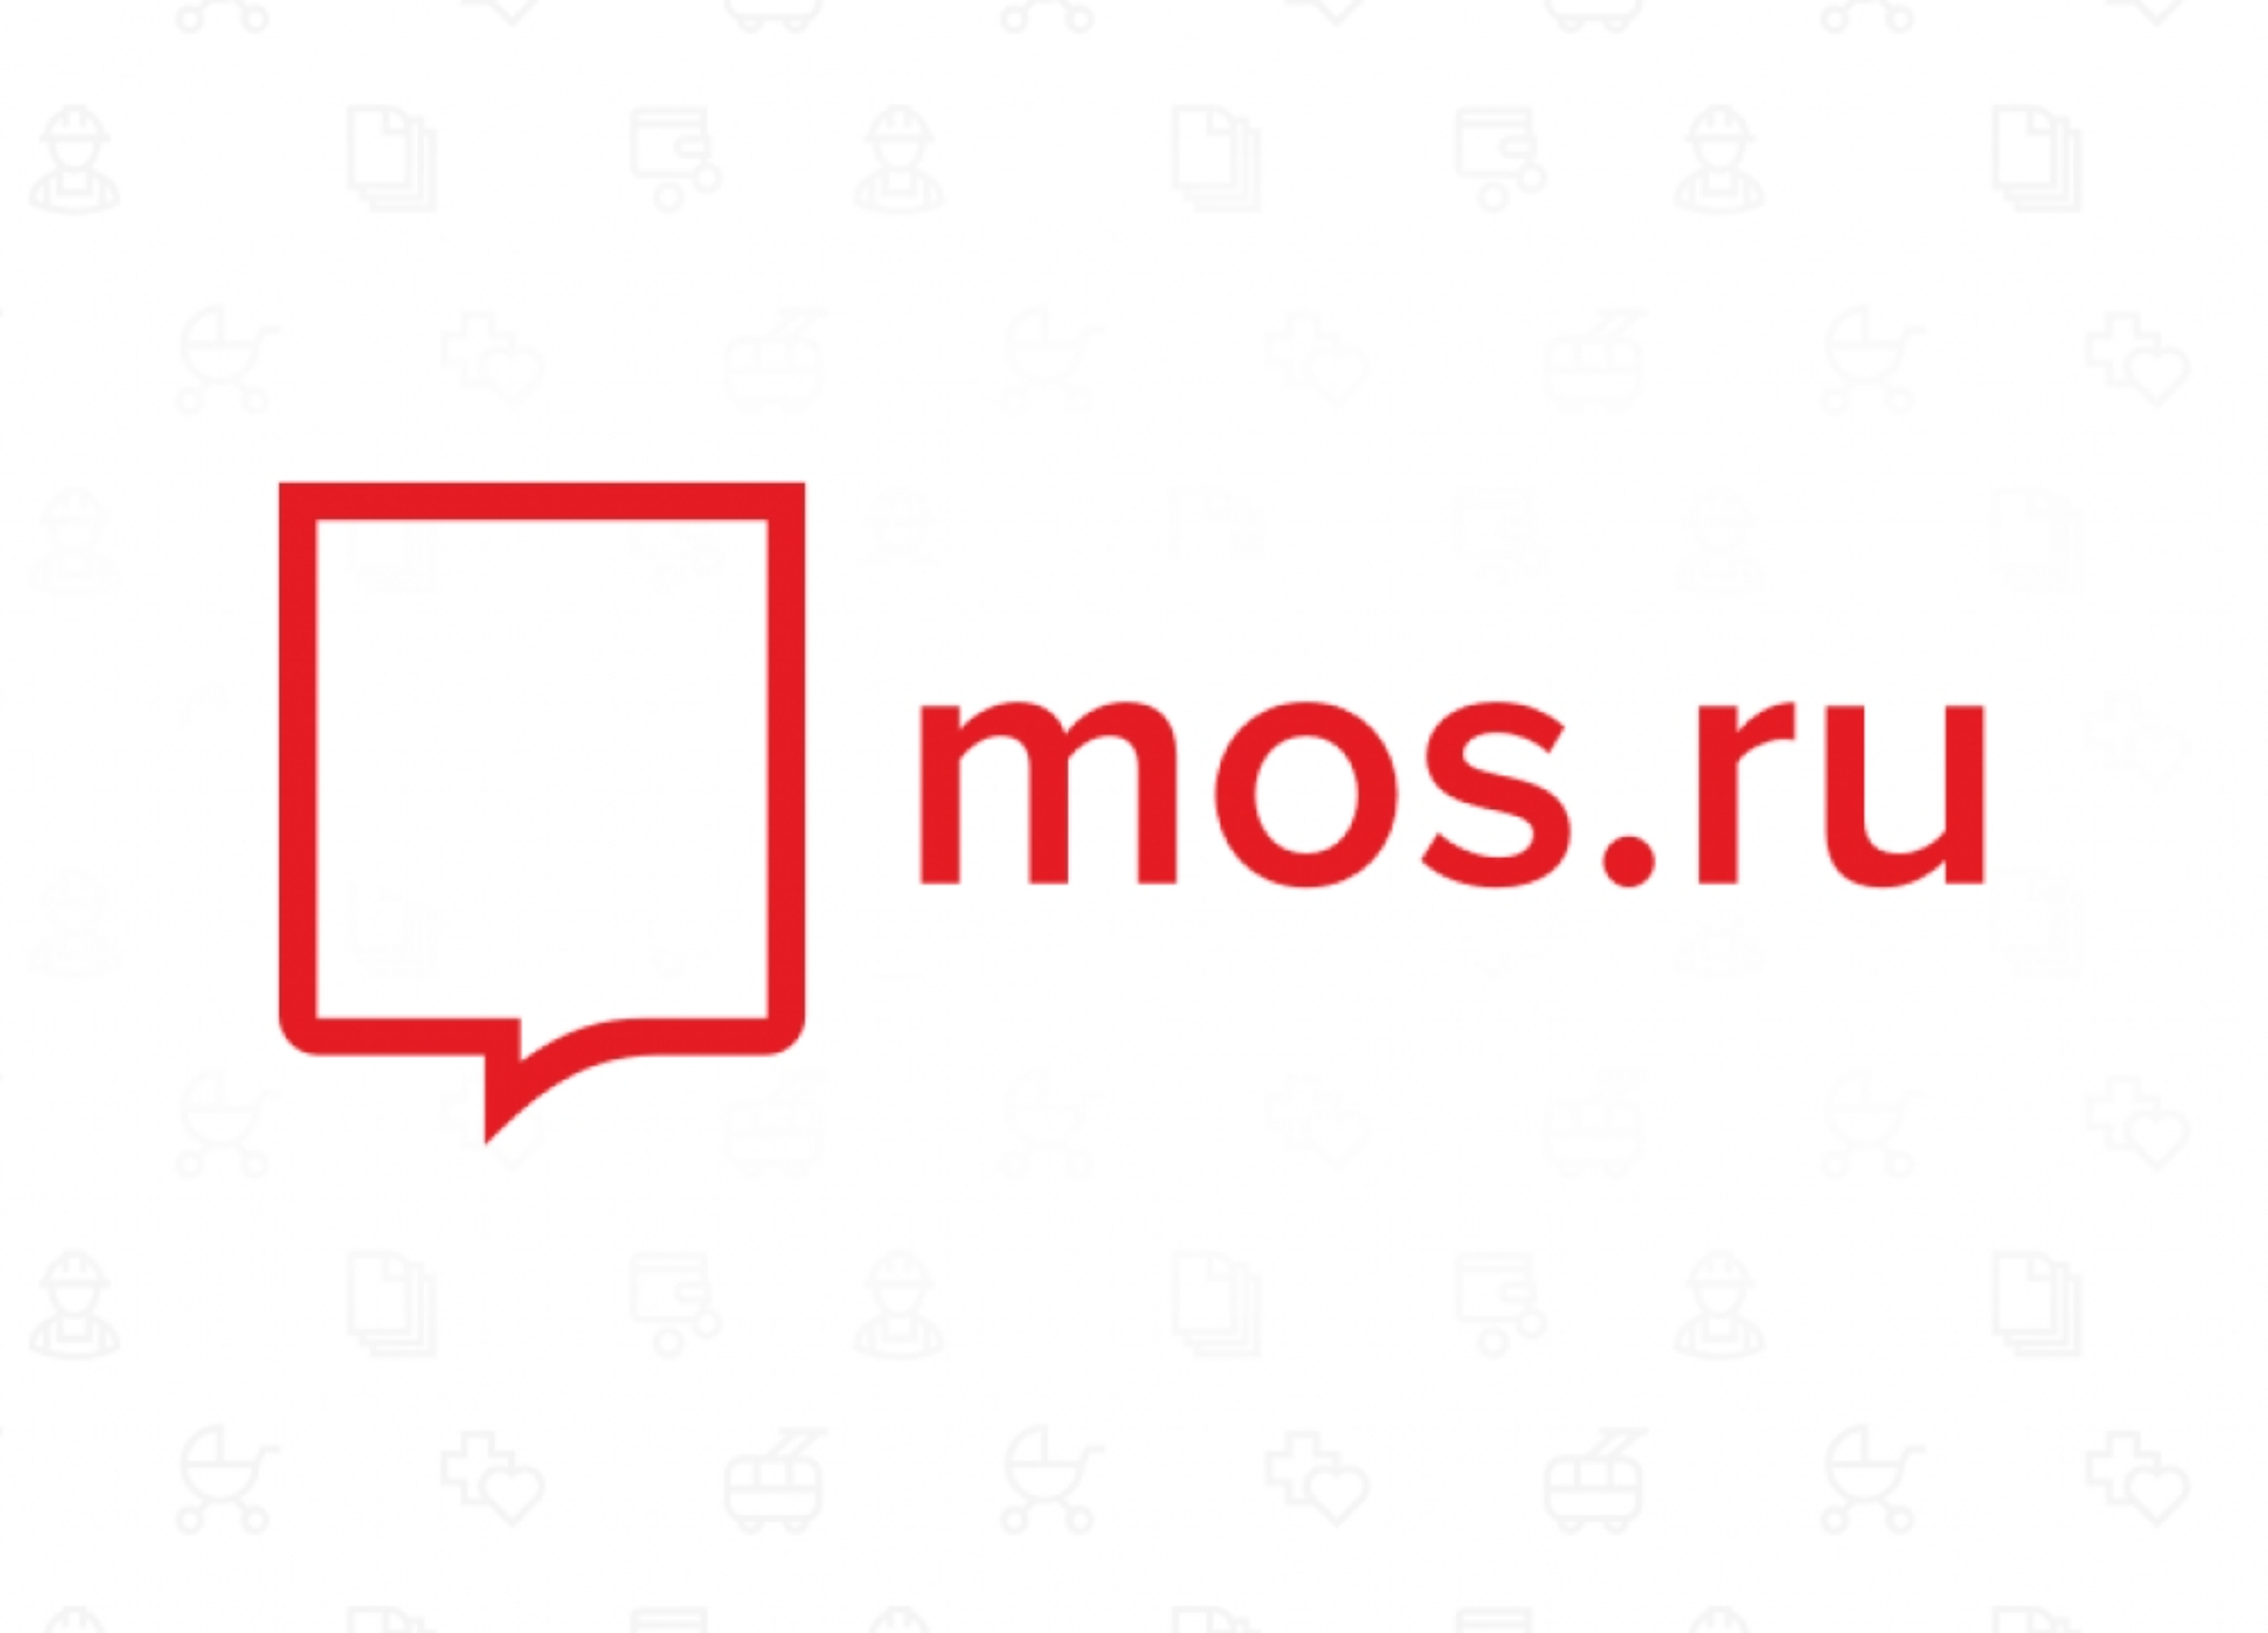 Qr мос ру. Mos.ru логотип. Логотип сайта мэра Москвы. Мос РК.